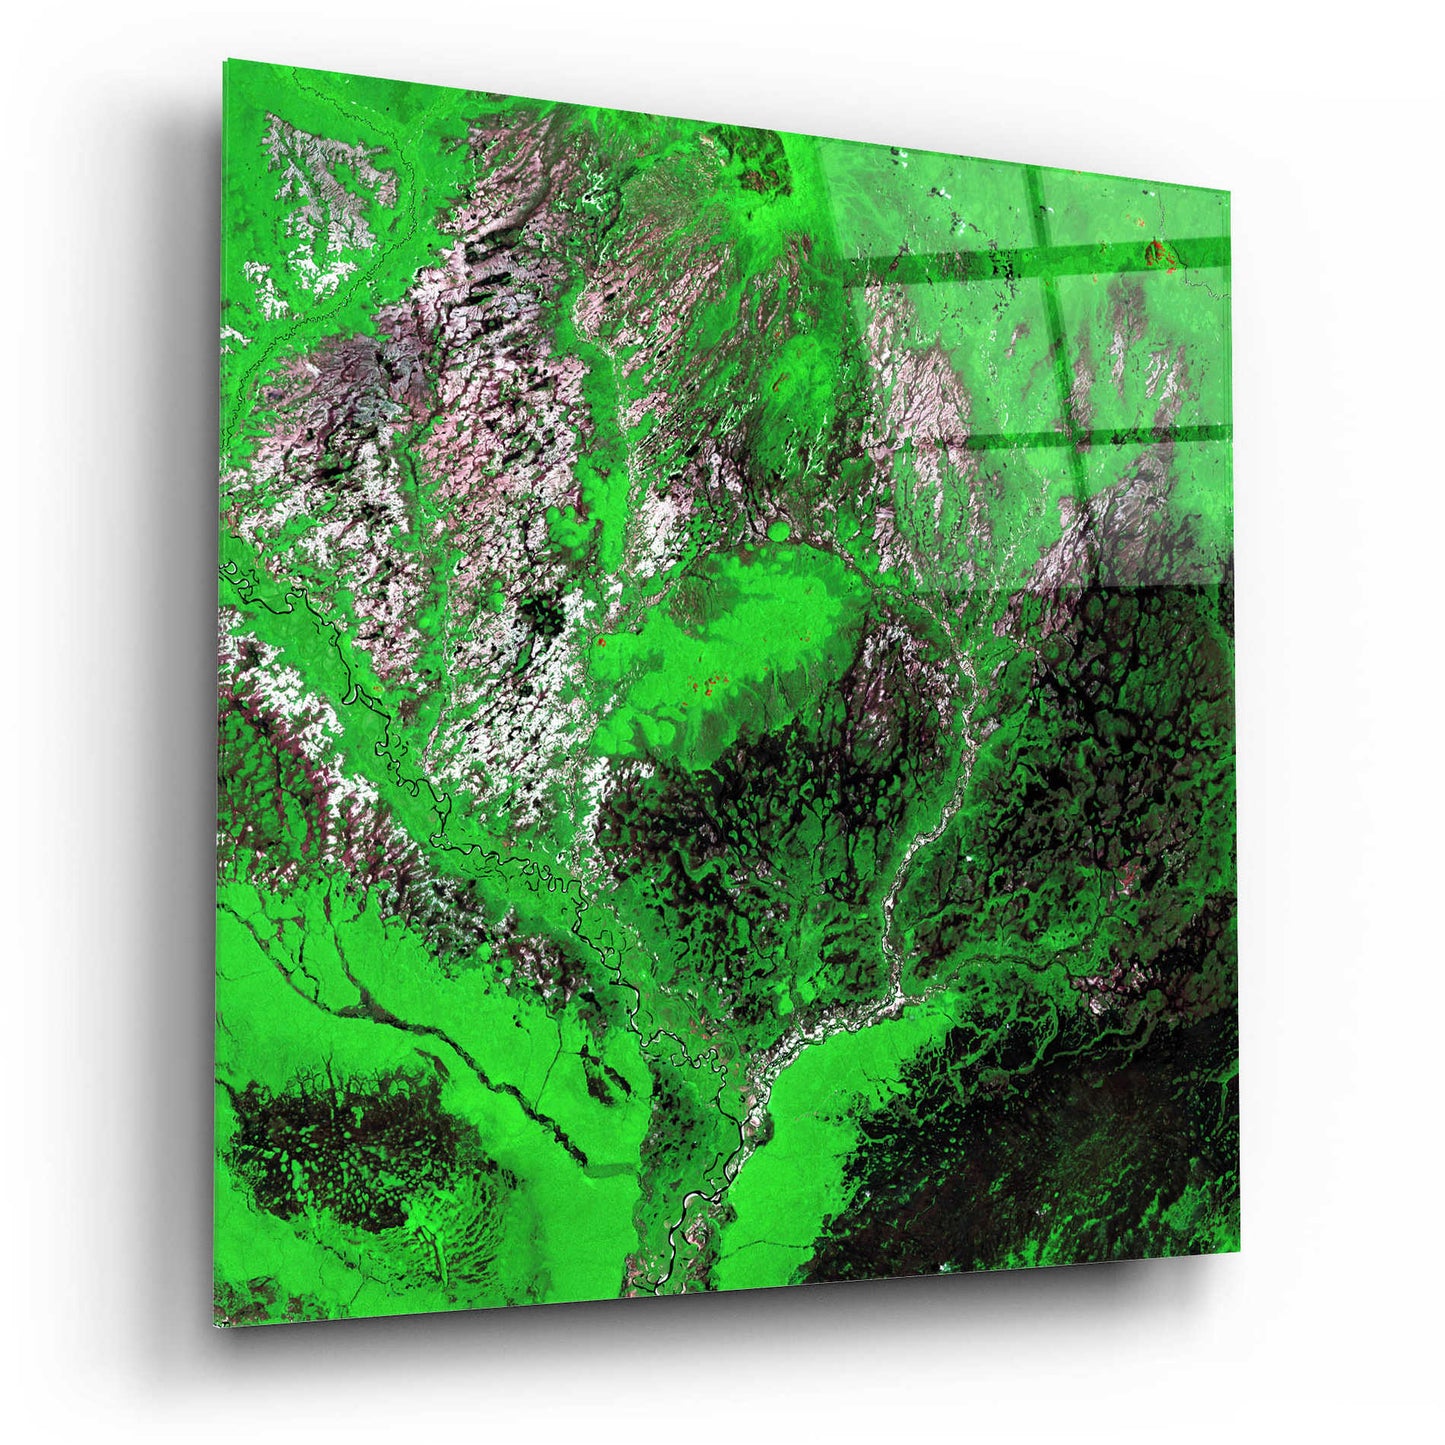 Epic Art 'Earth as Art: Araca River' Acrylic Glass Wall Art,12x12